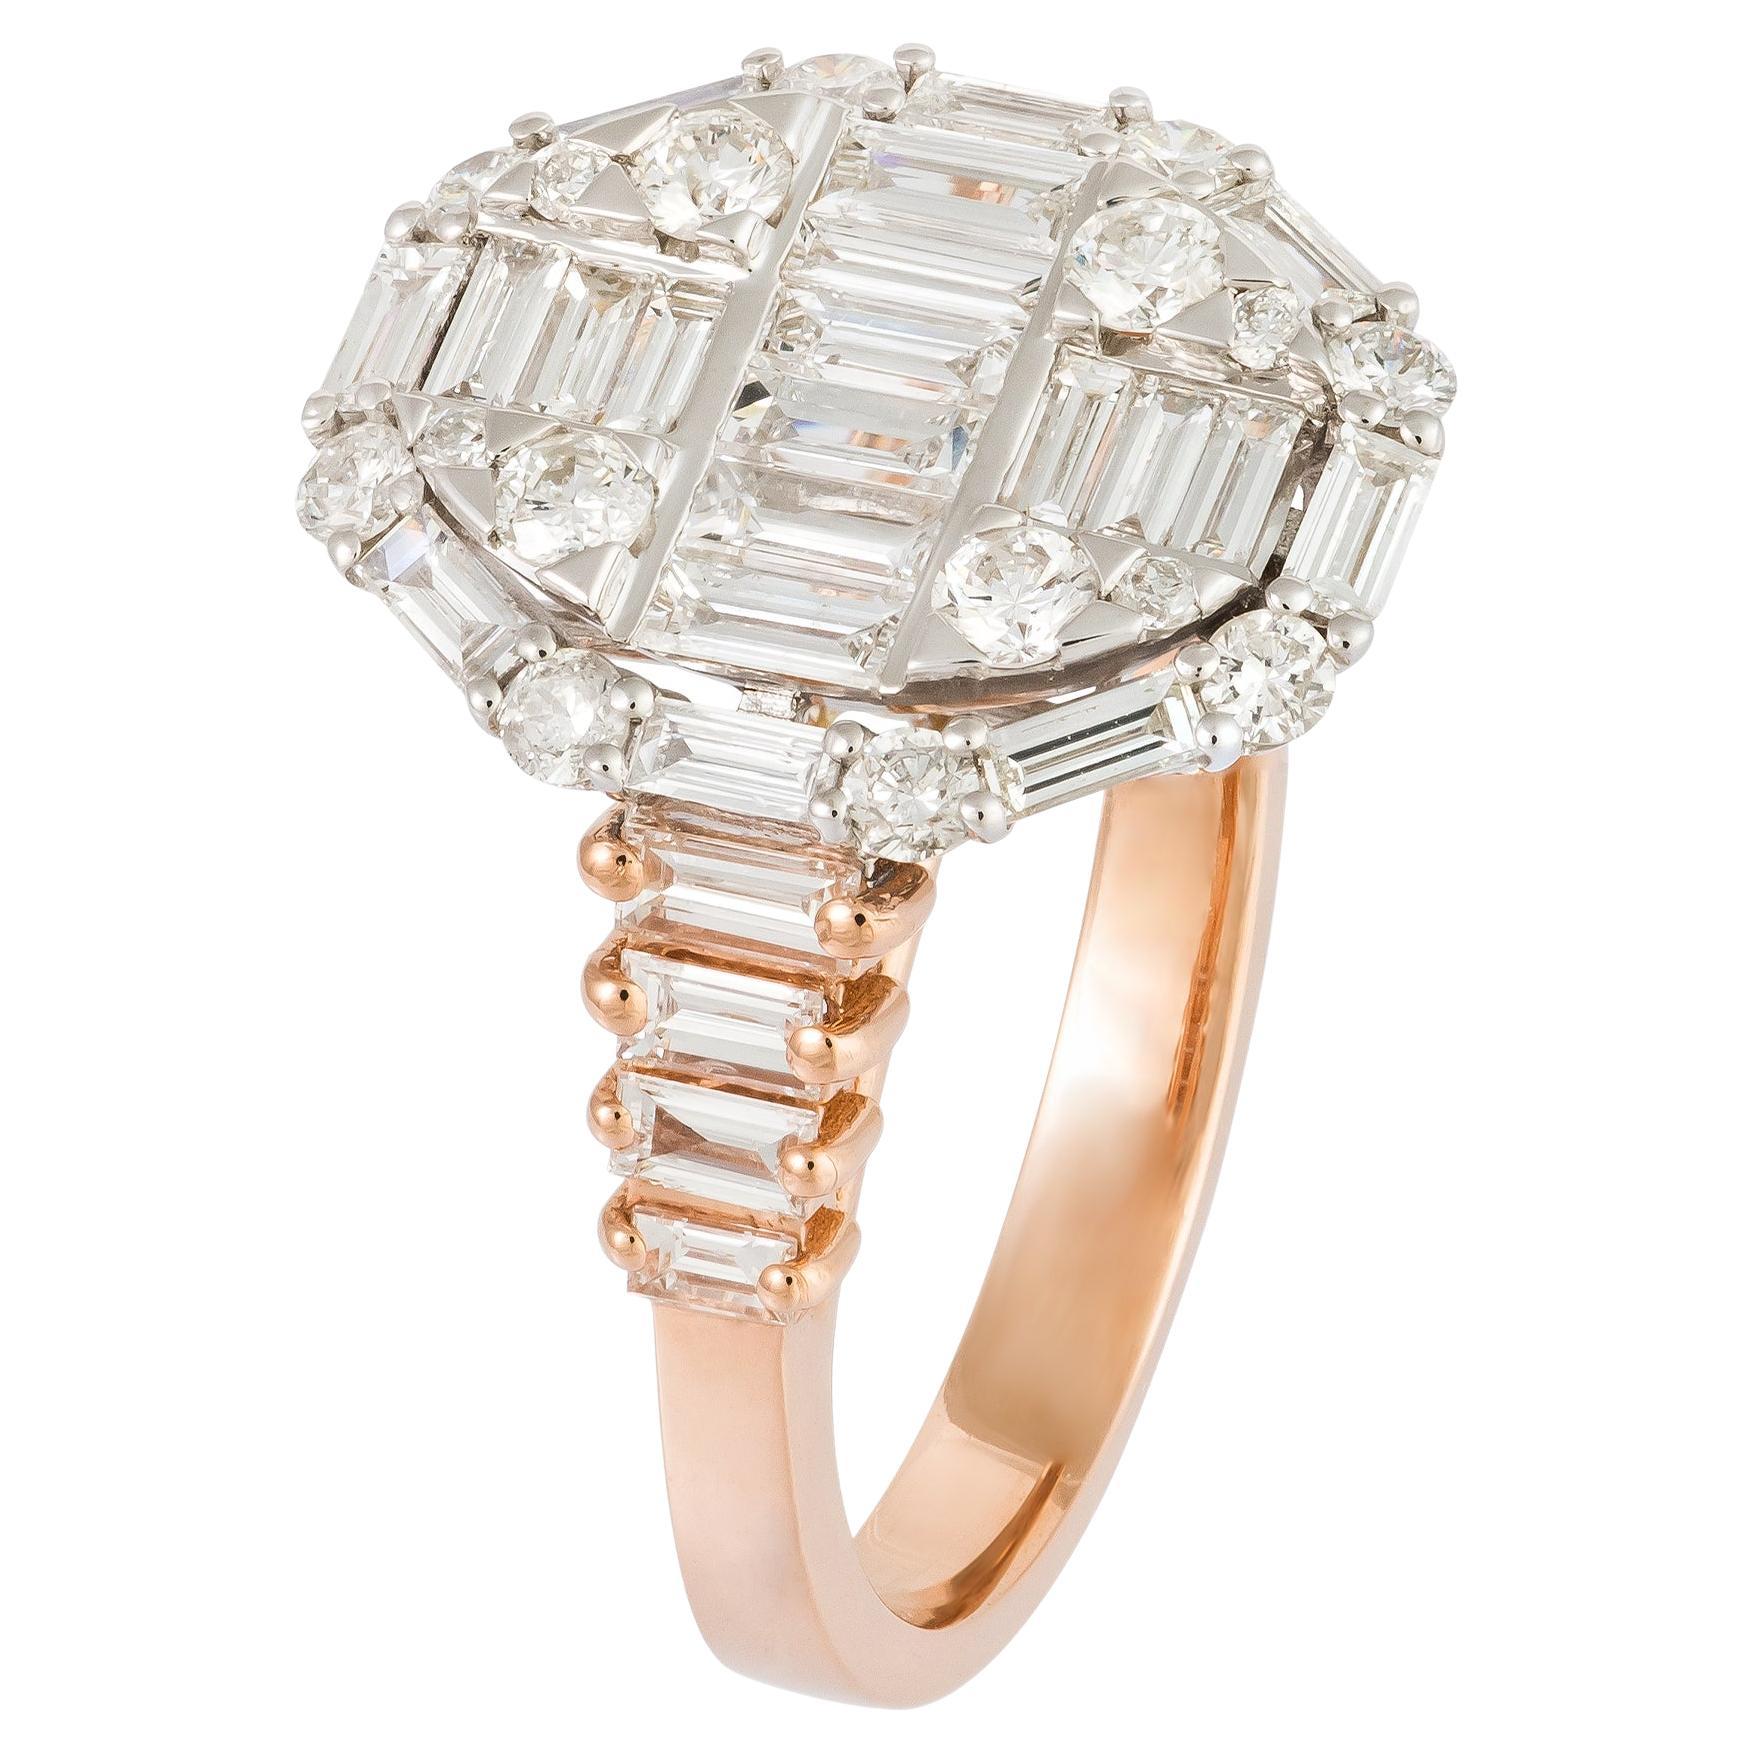 For Sale:  Impressive Pink 18K Gold White Diamond Ring For Her